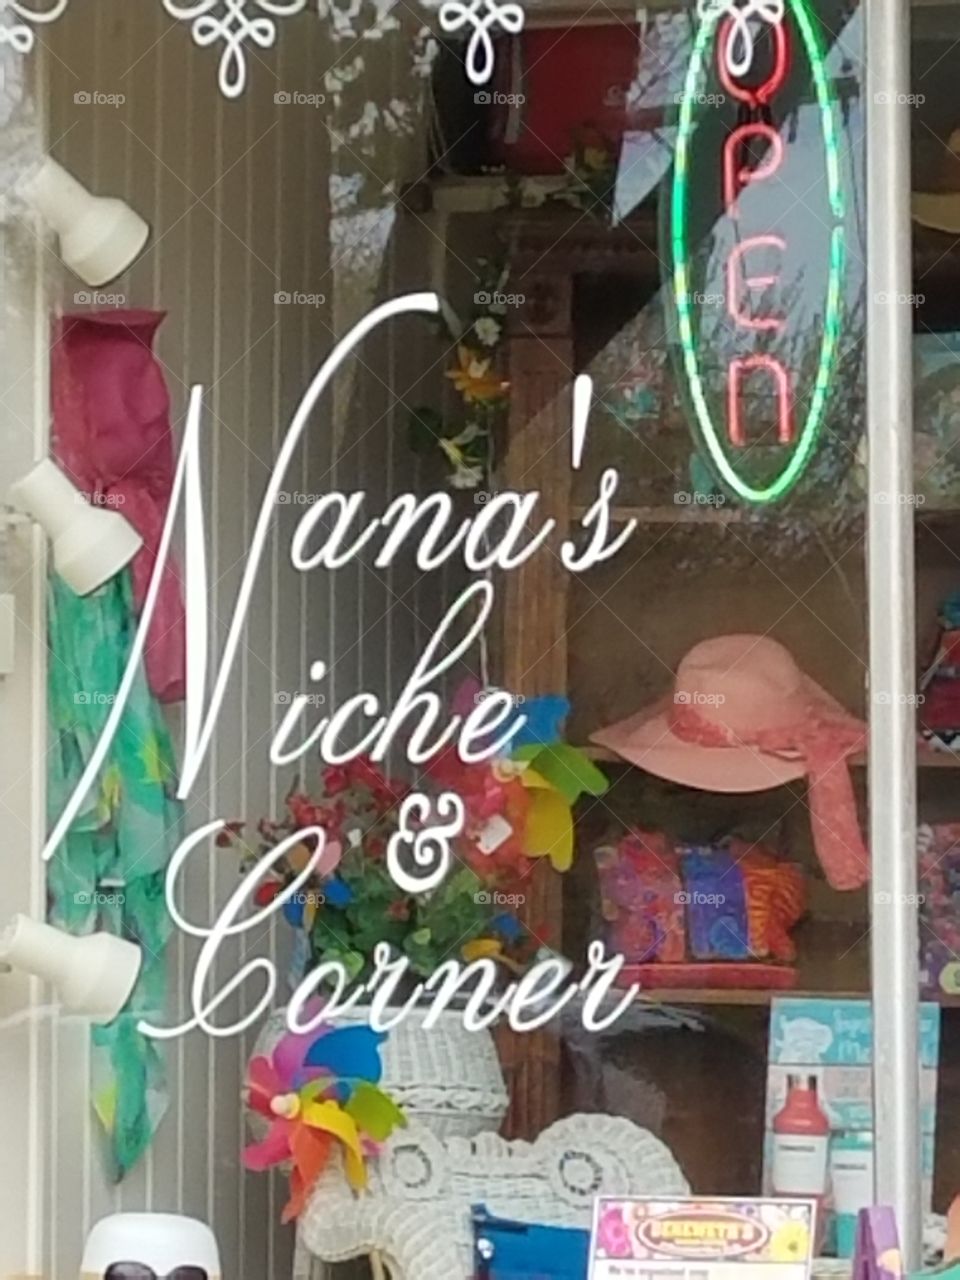 Nana's